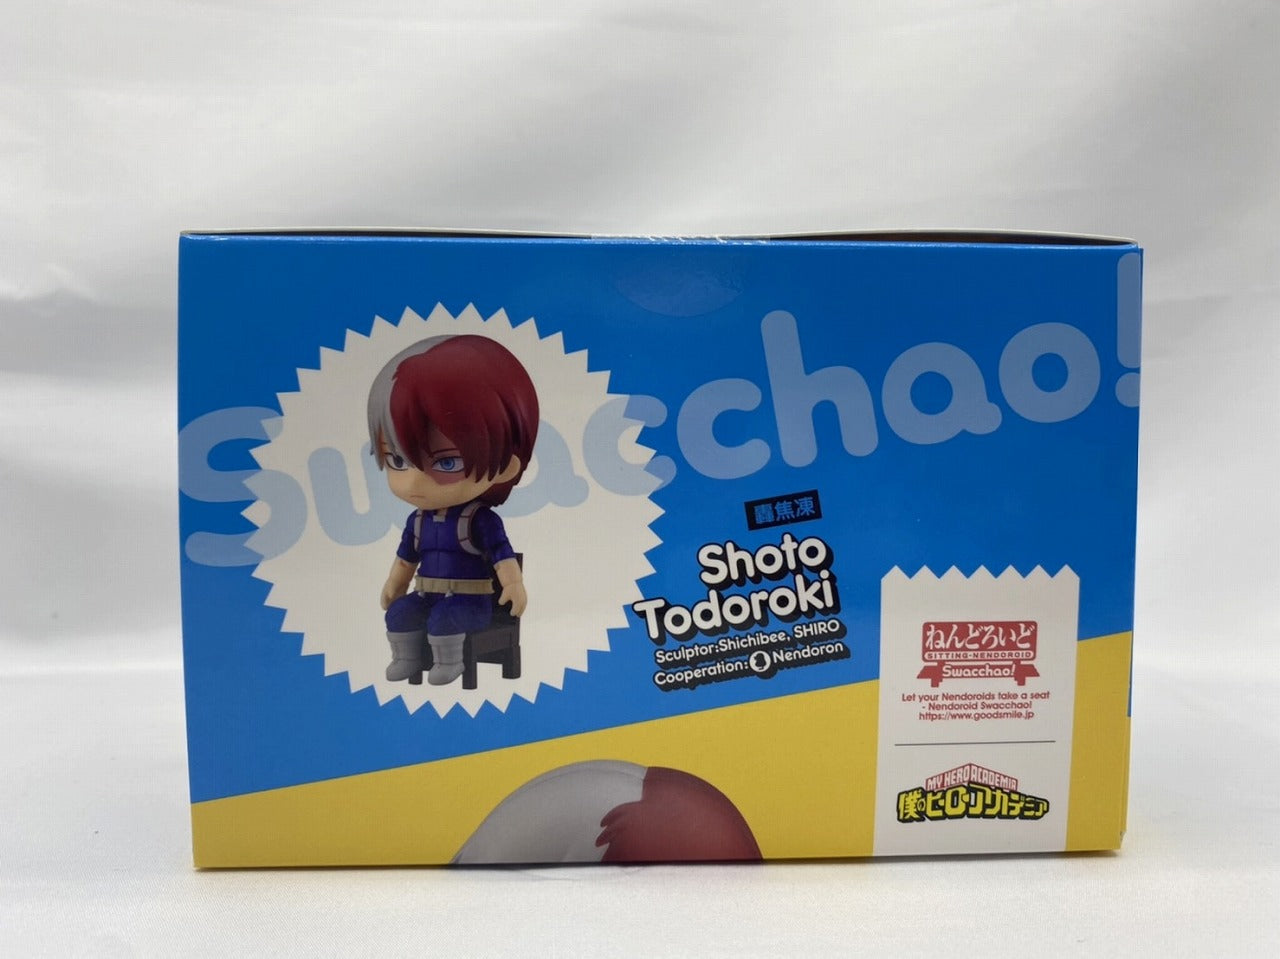 Nendoroid Swacchao! Shoto Todoroki (My Hero Academia)